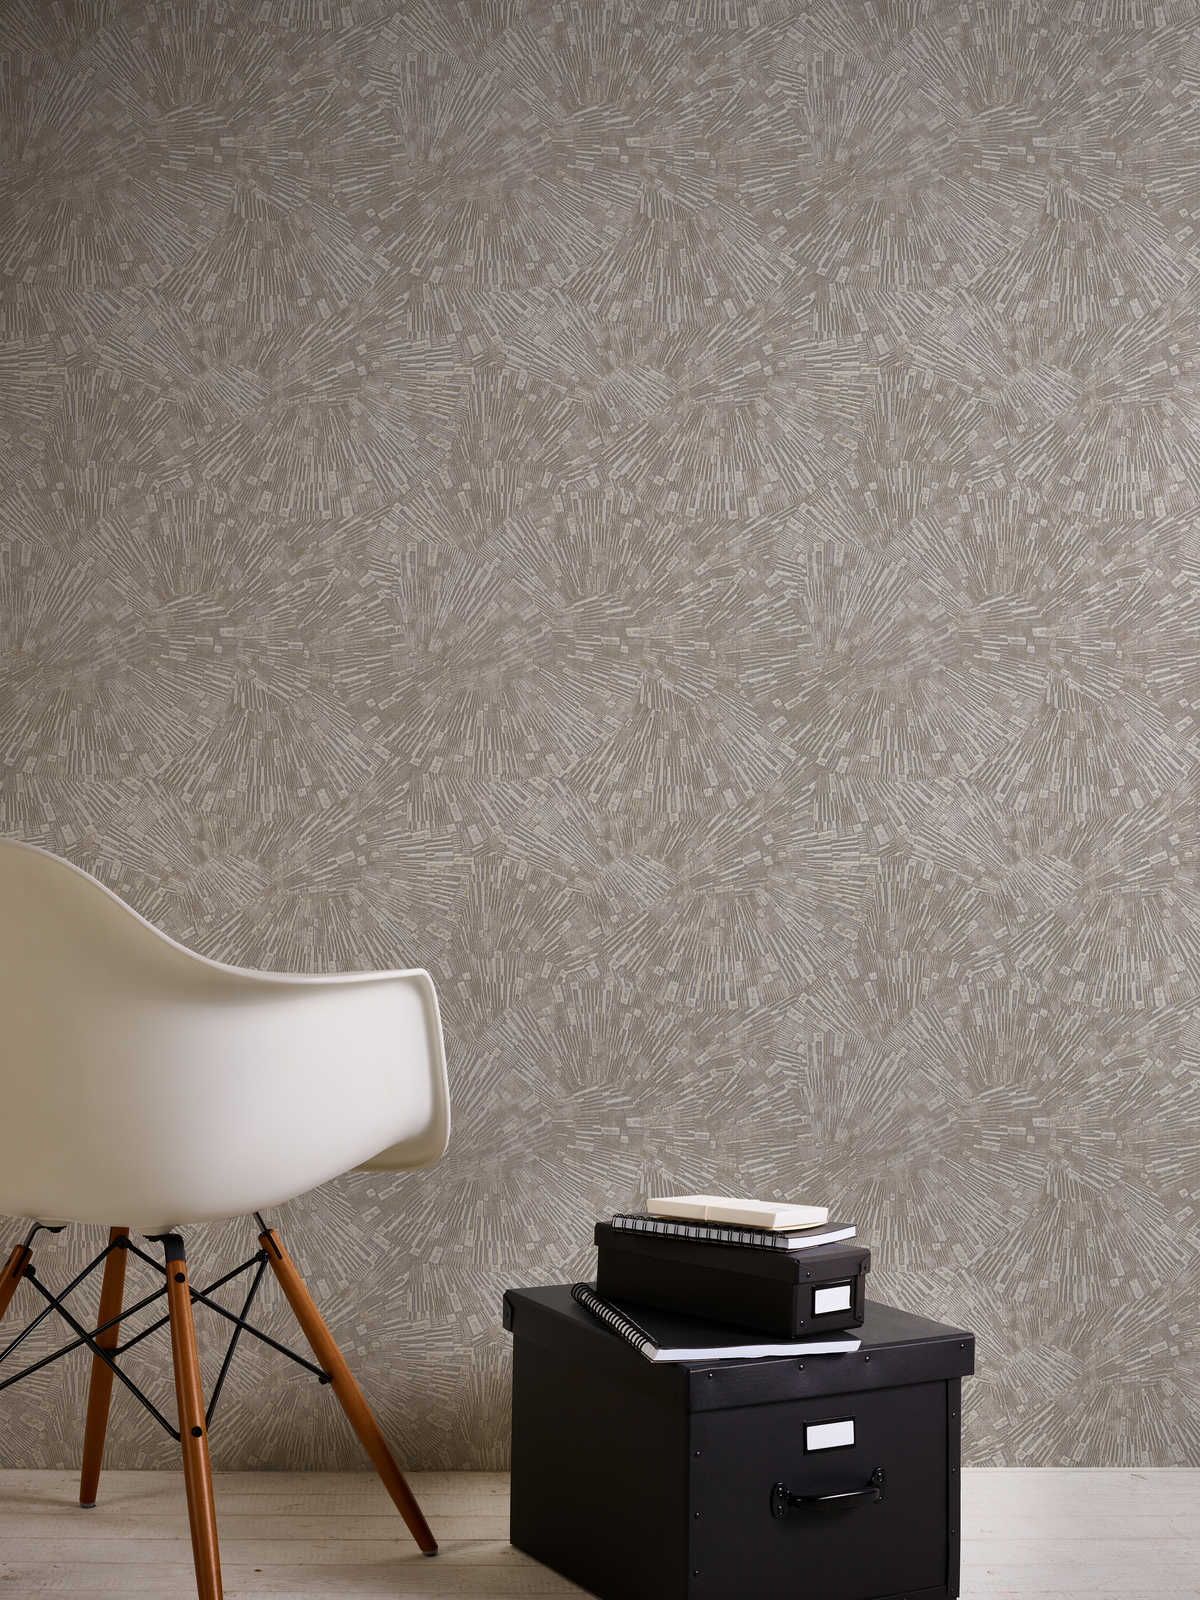             Non-woven wallpaper metallic pattern in retro style - beige, brown
        